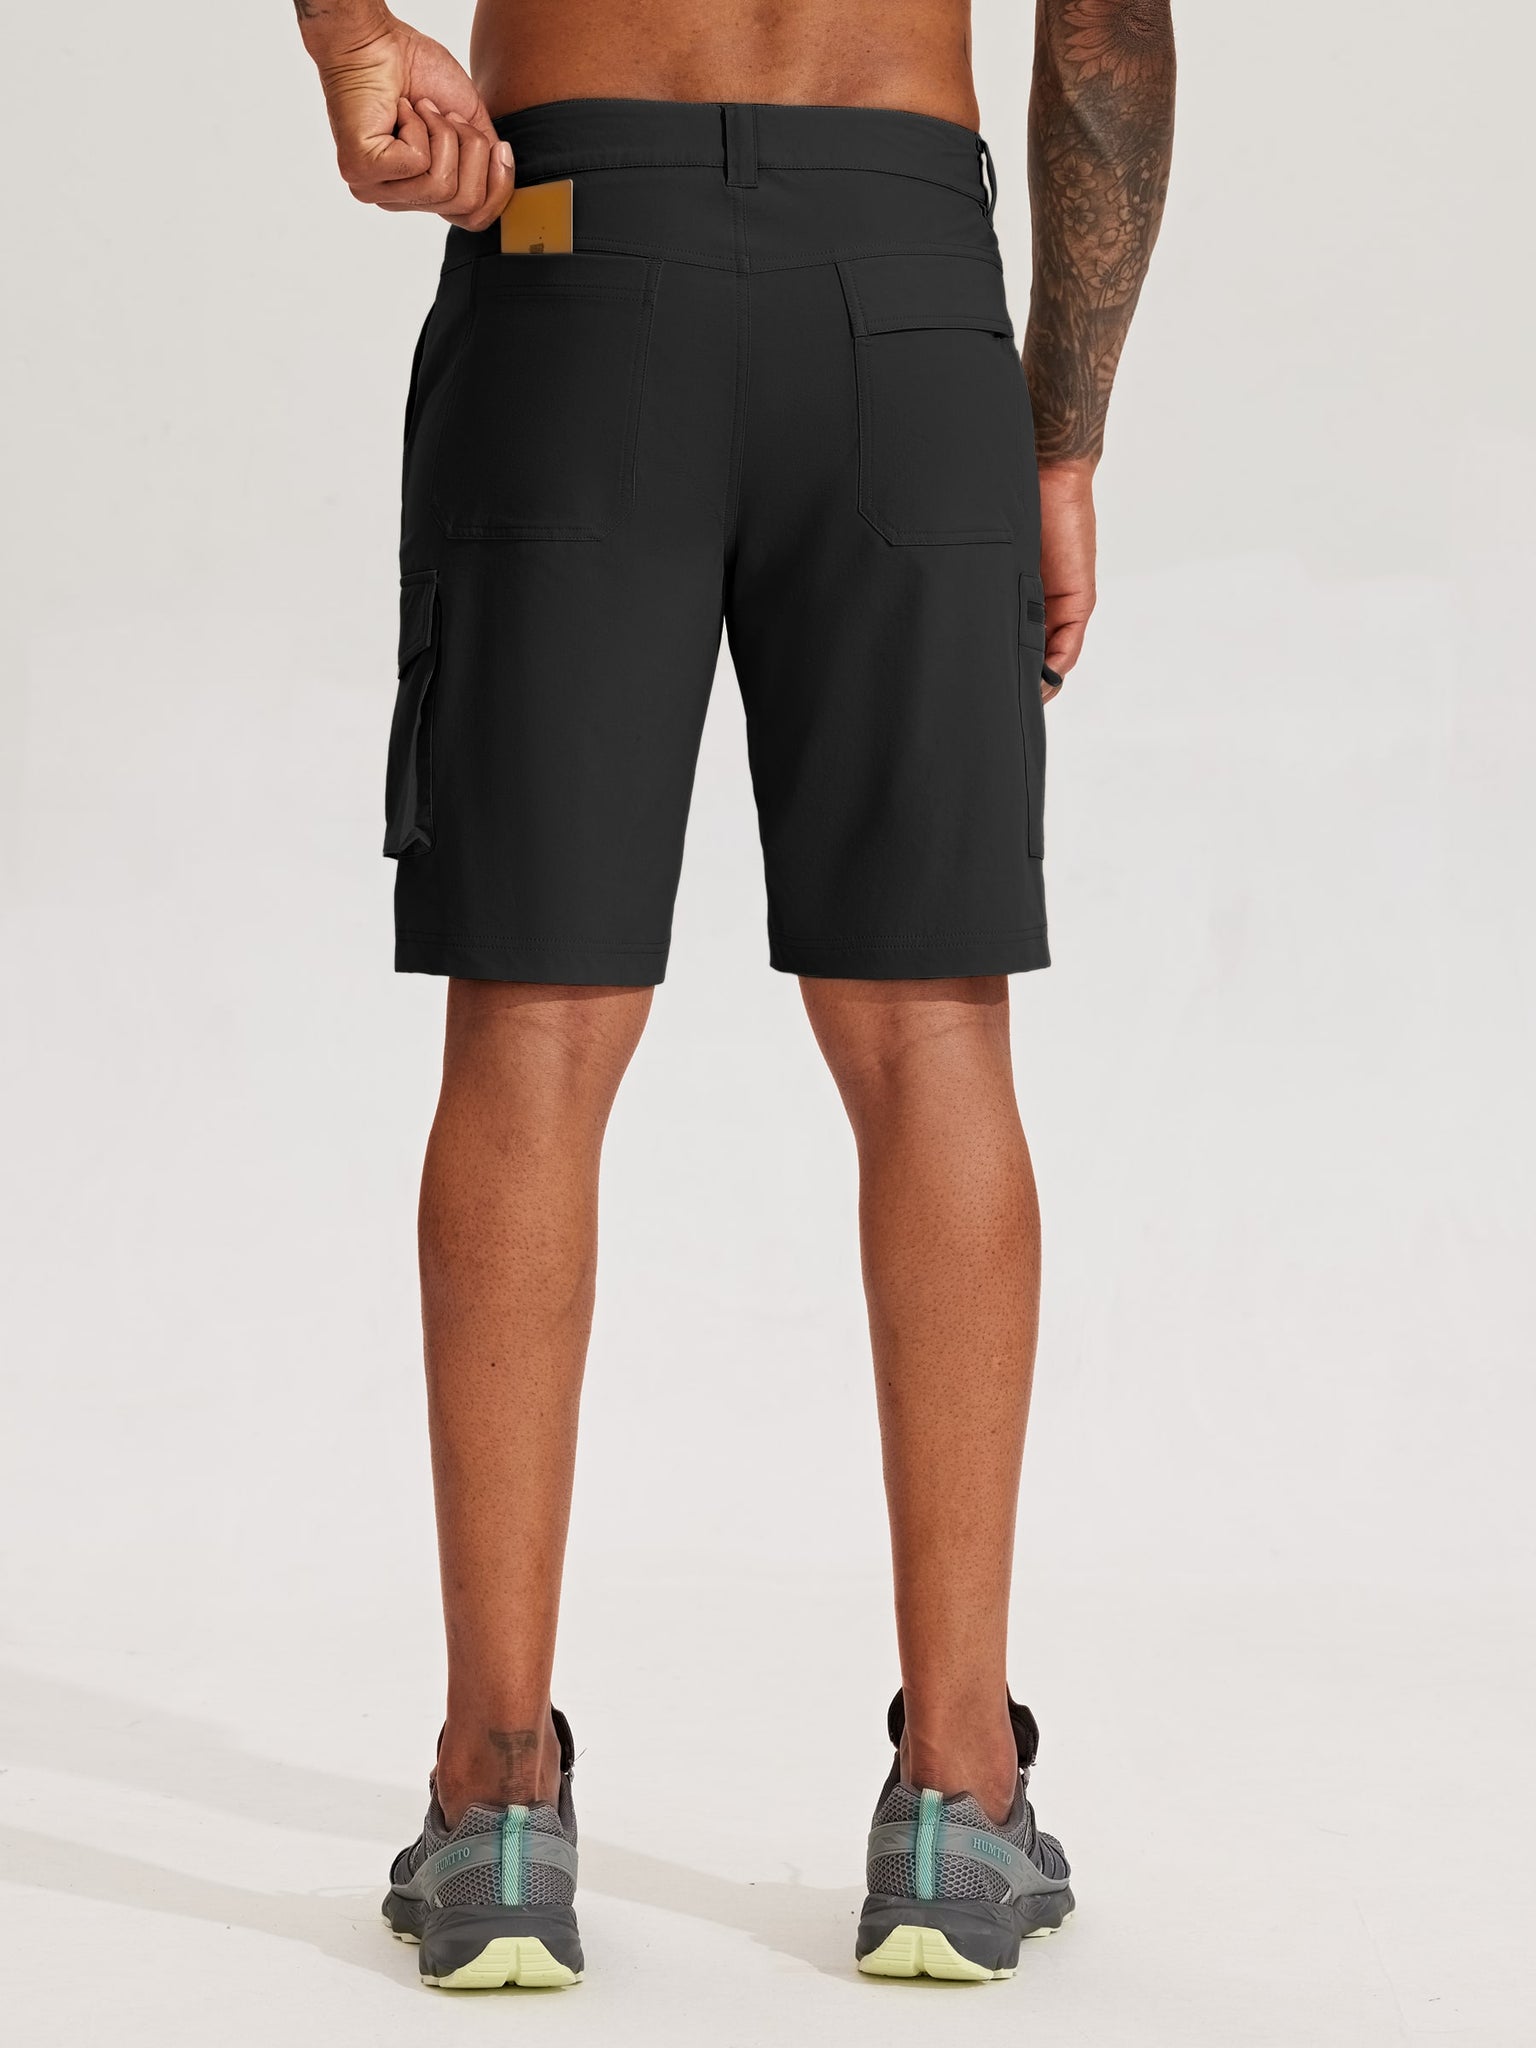 Men's Stretch Cargo Shorts 9 Inch_Black2